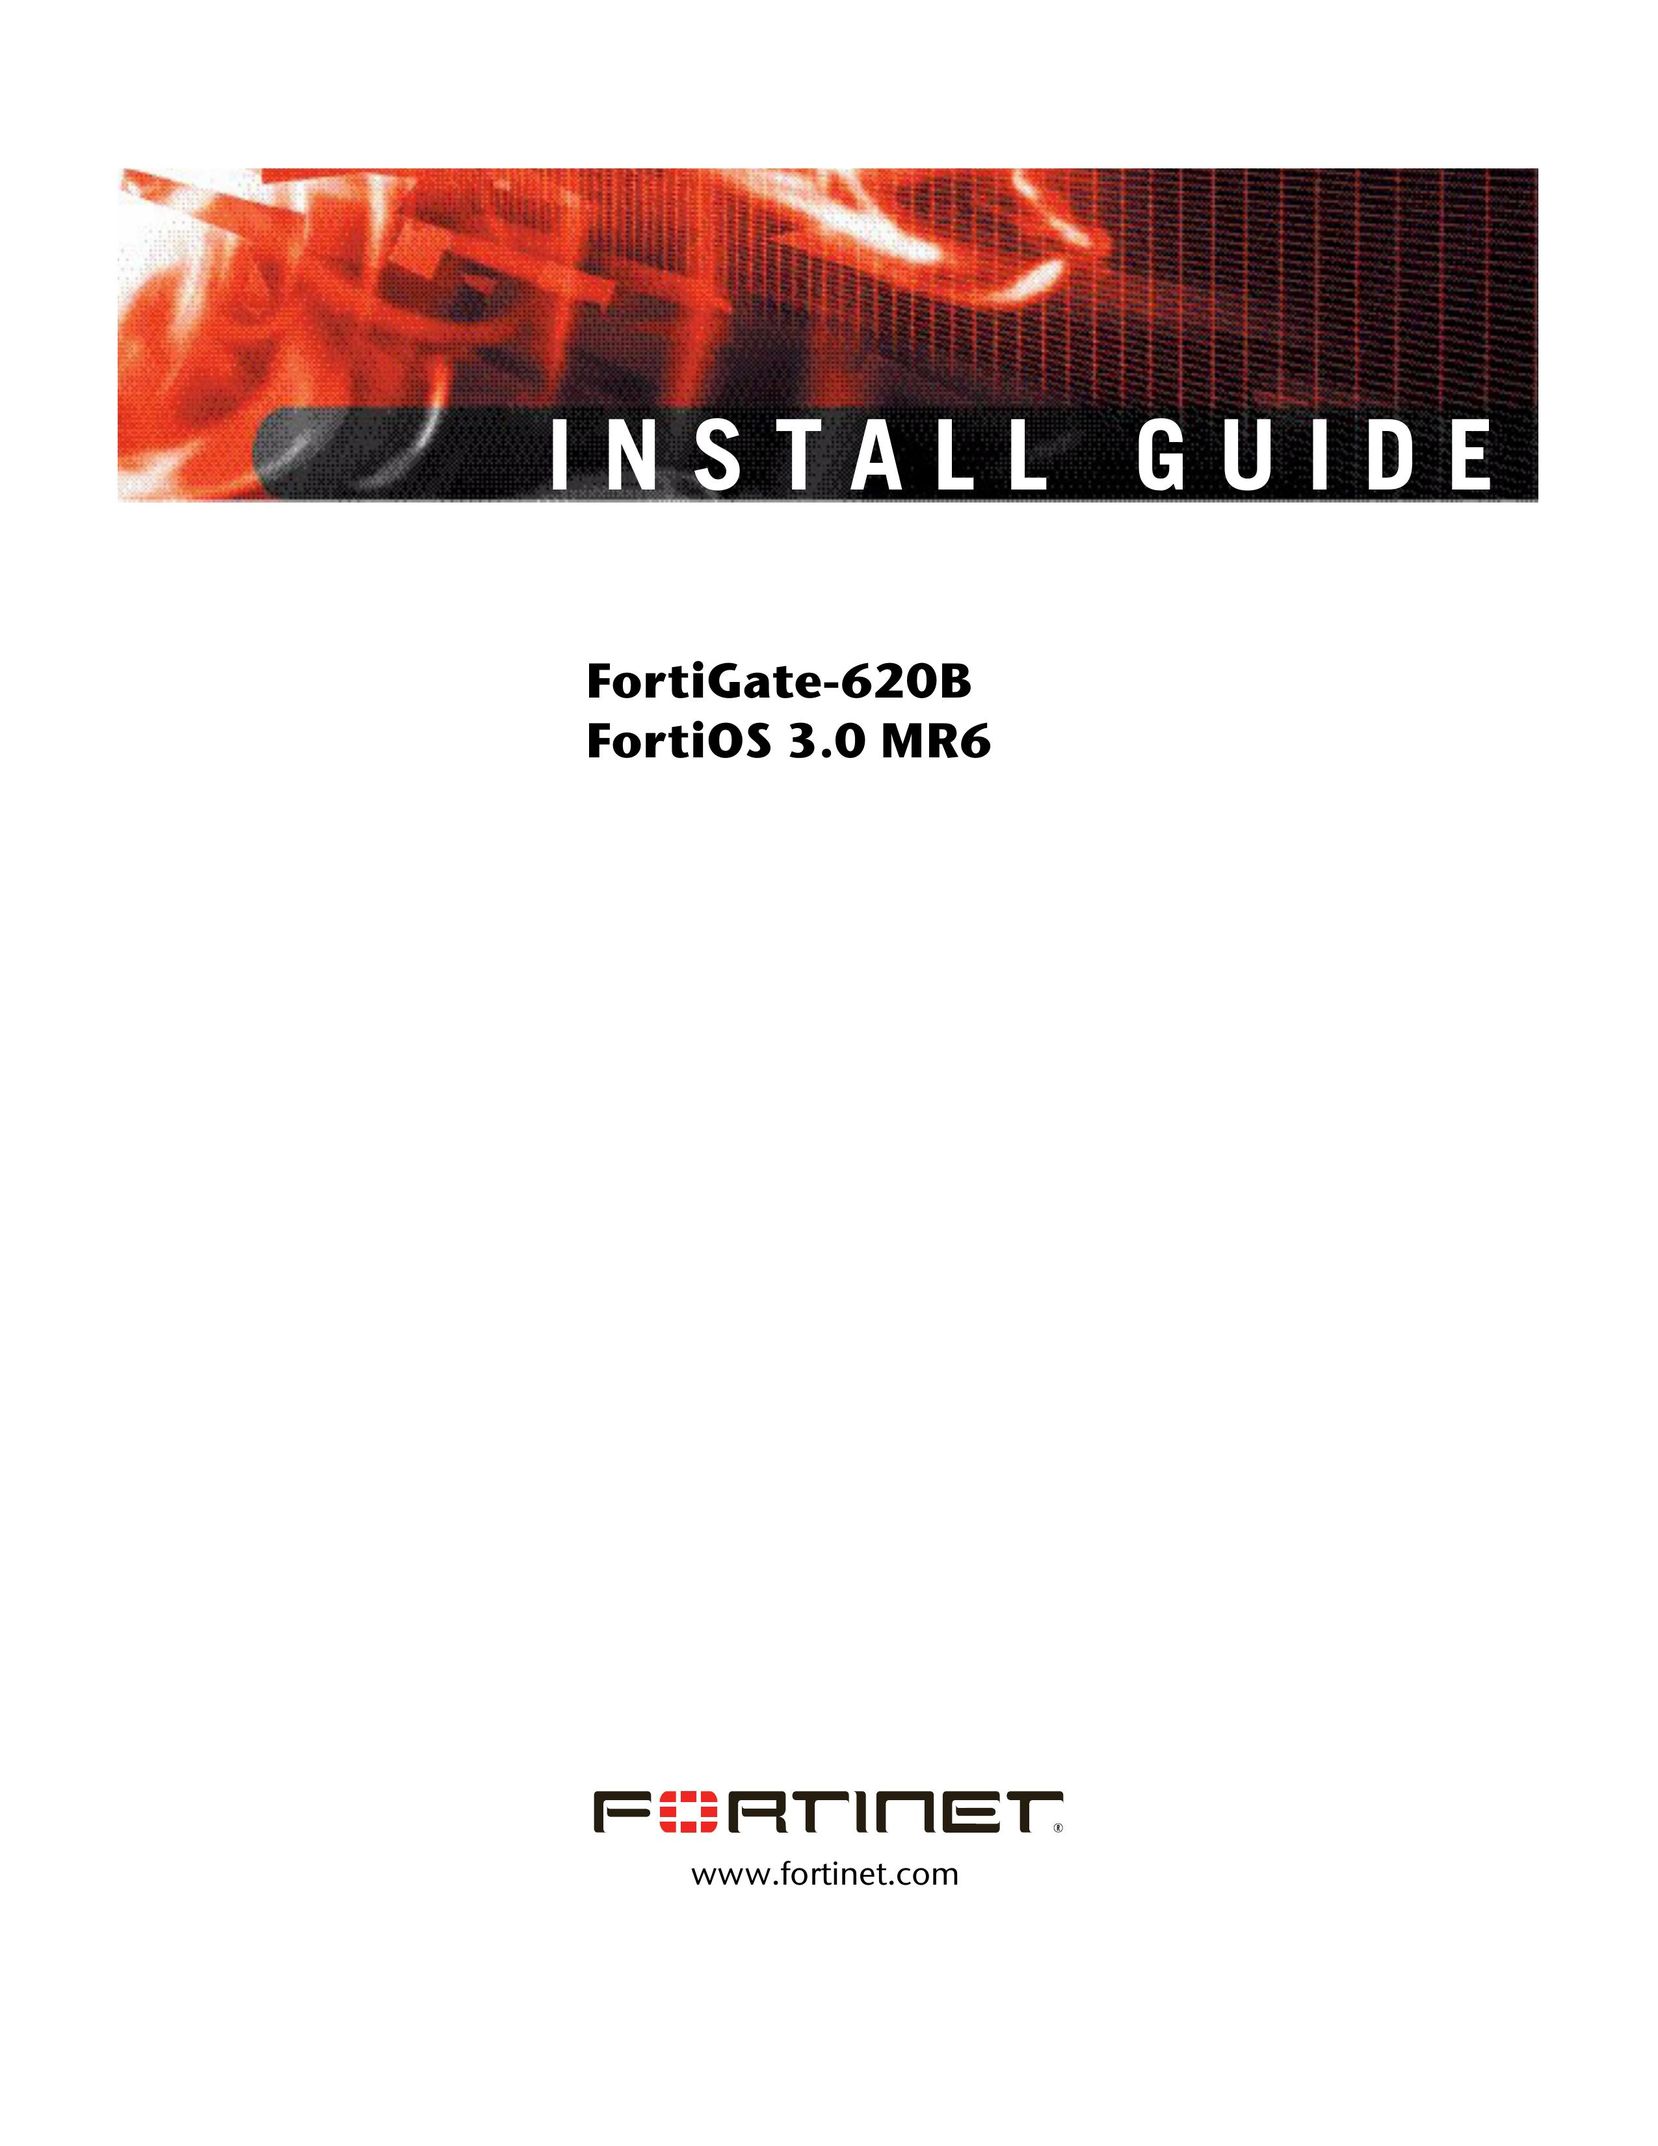 Fortinet 620B Network Card User Manual